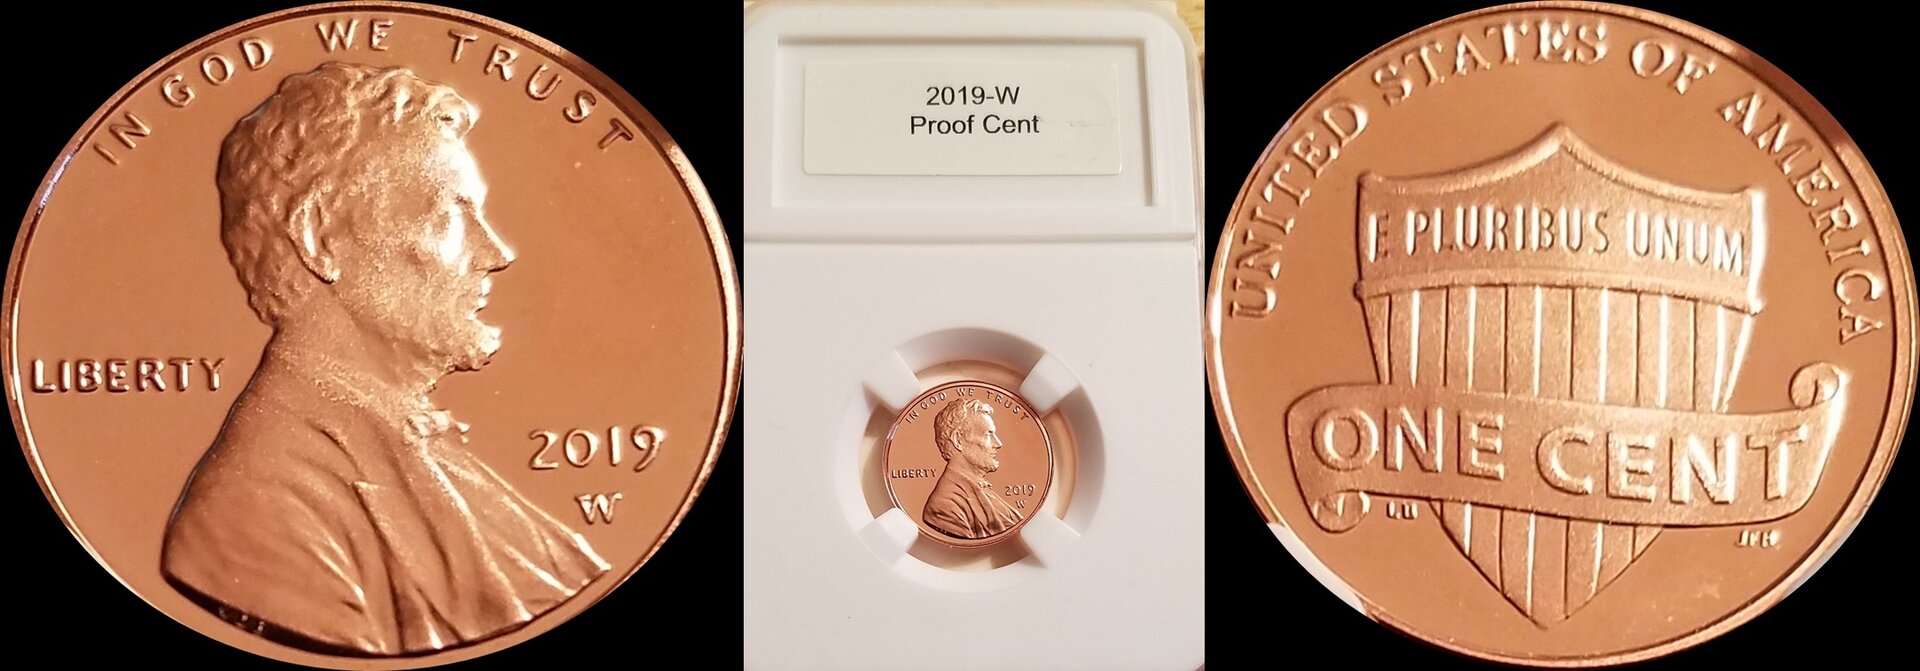 2019-W Proof Cent.jpg